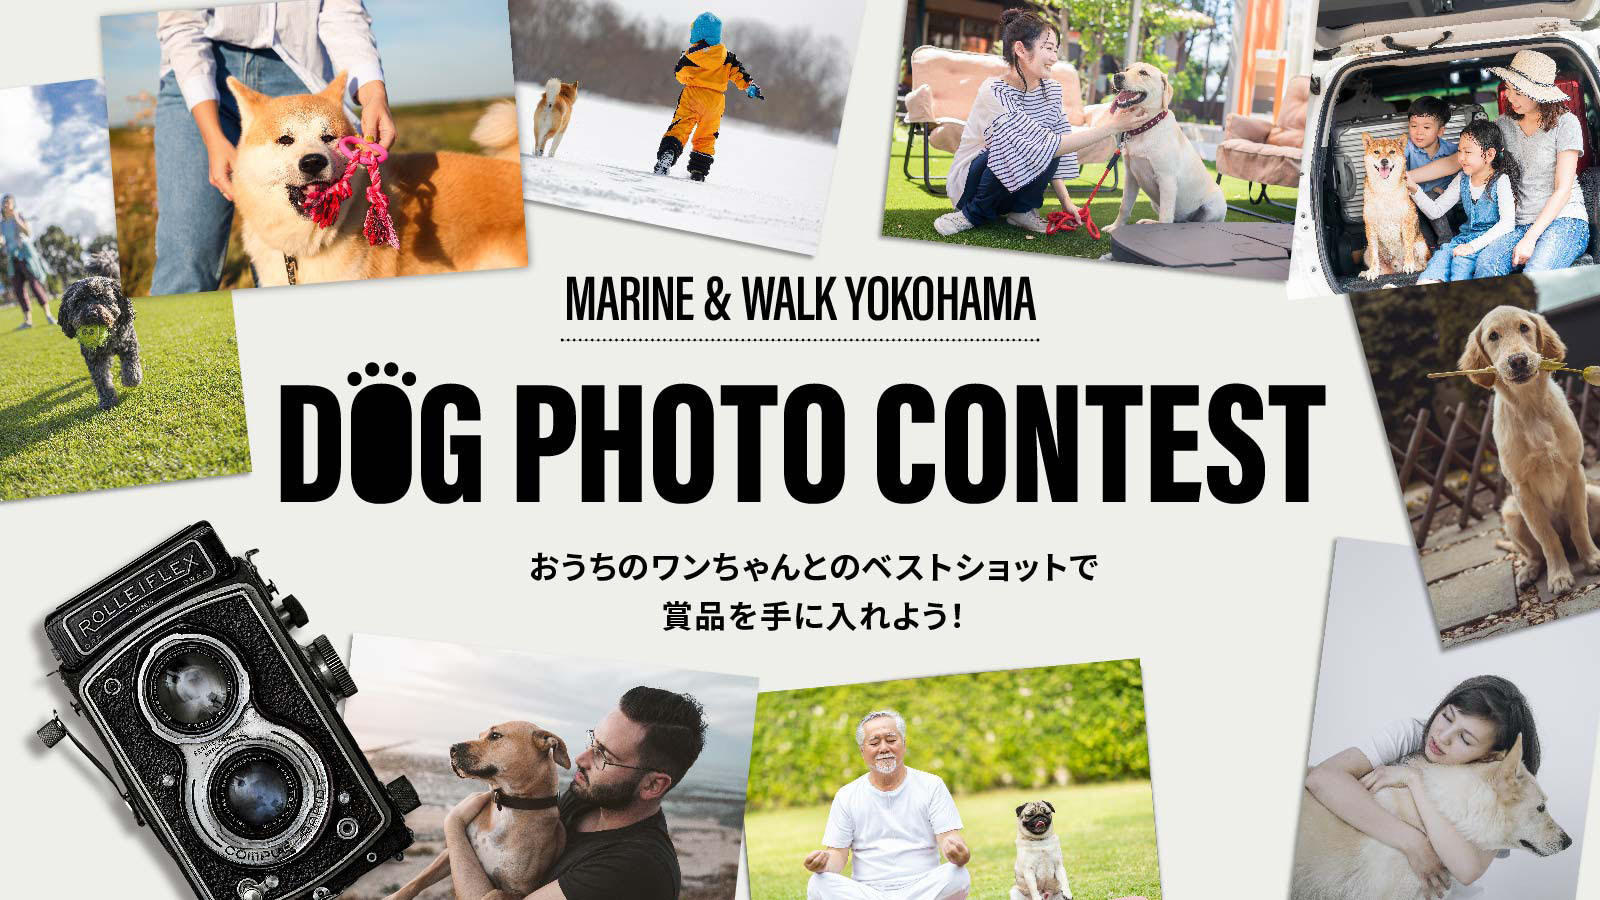 DOG PHOTO CONTEST 2022.08.29 mon - 09.11 sun